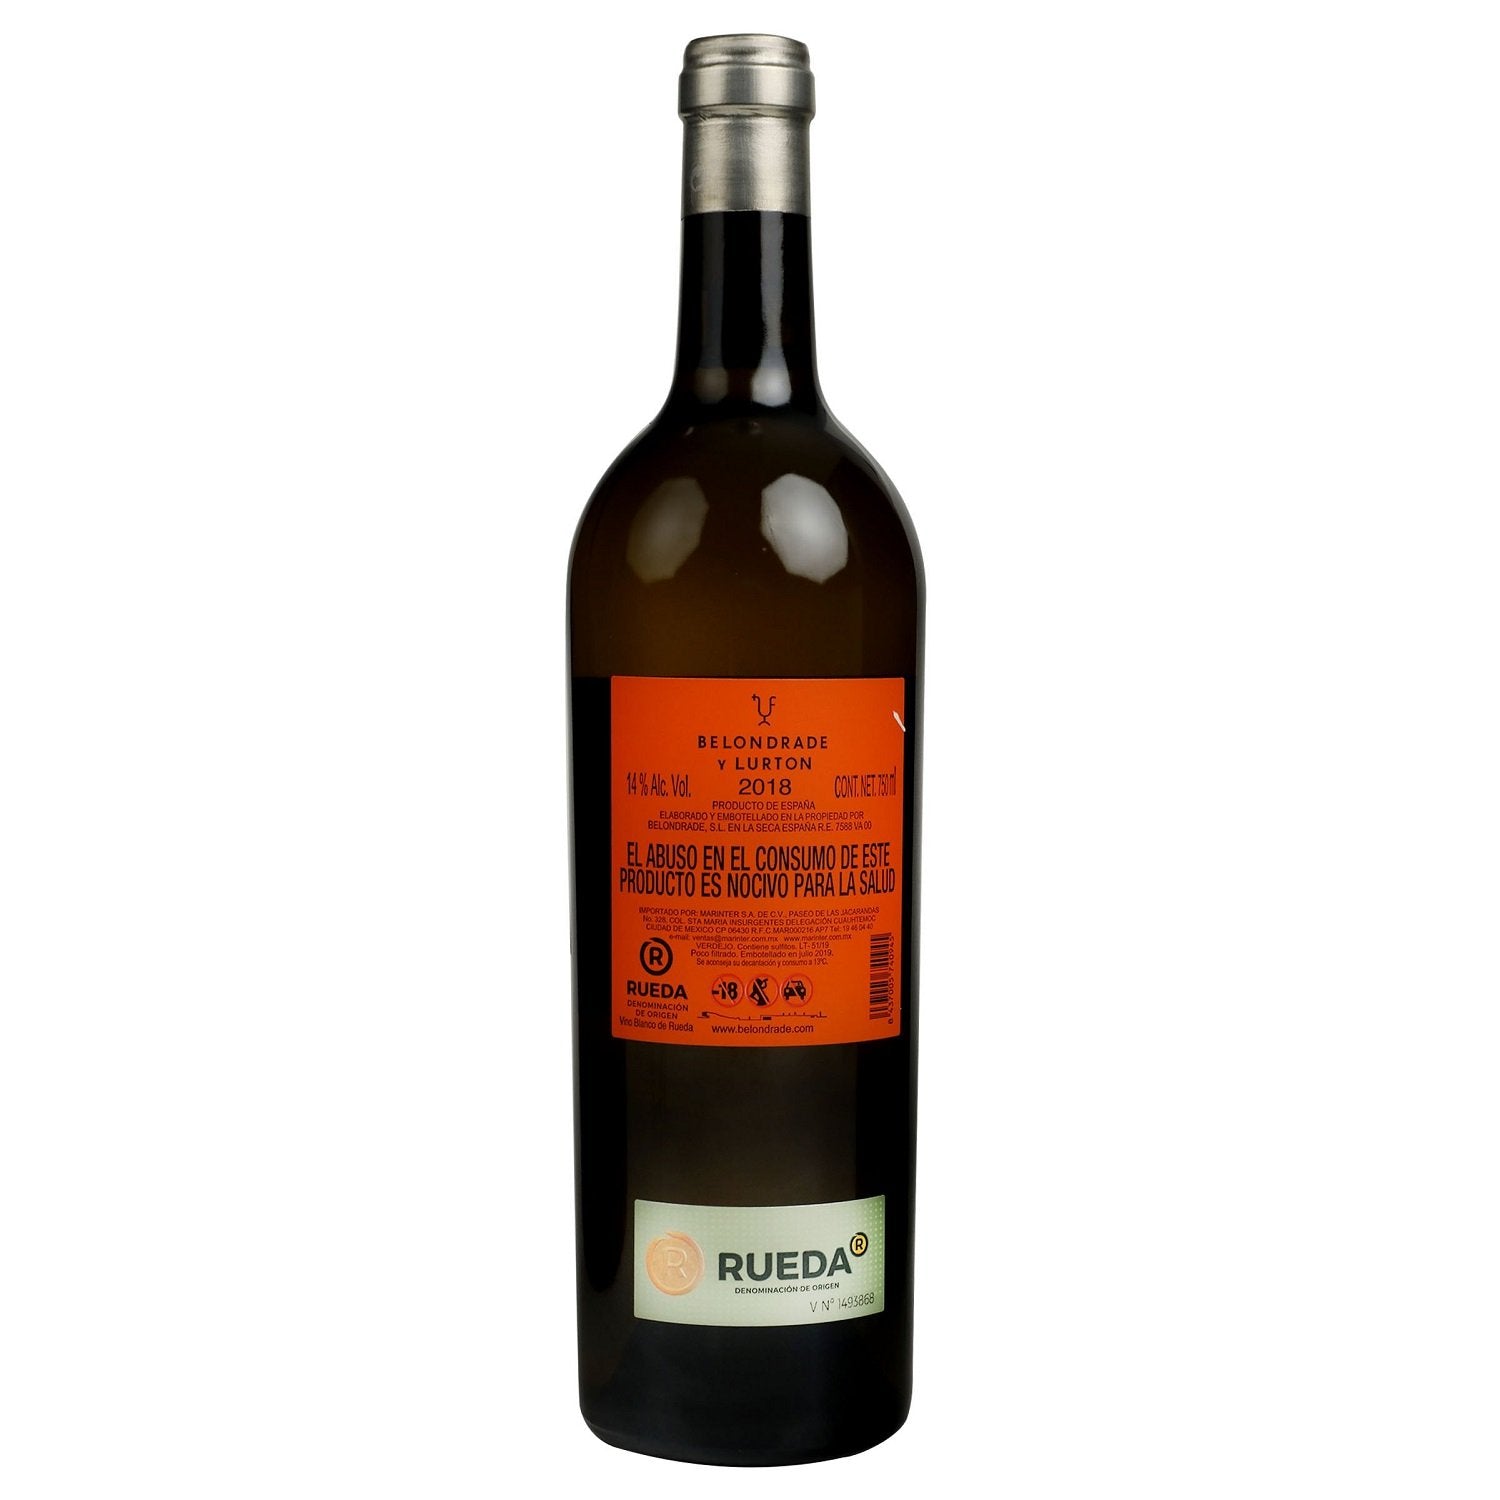 Vino Blanco - Belondrade y Lurton 18 - 750 ml